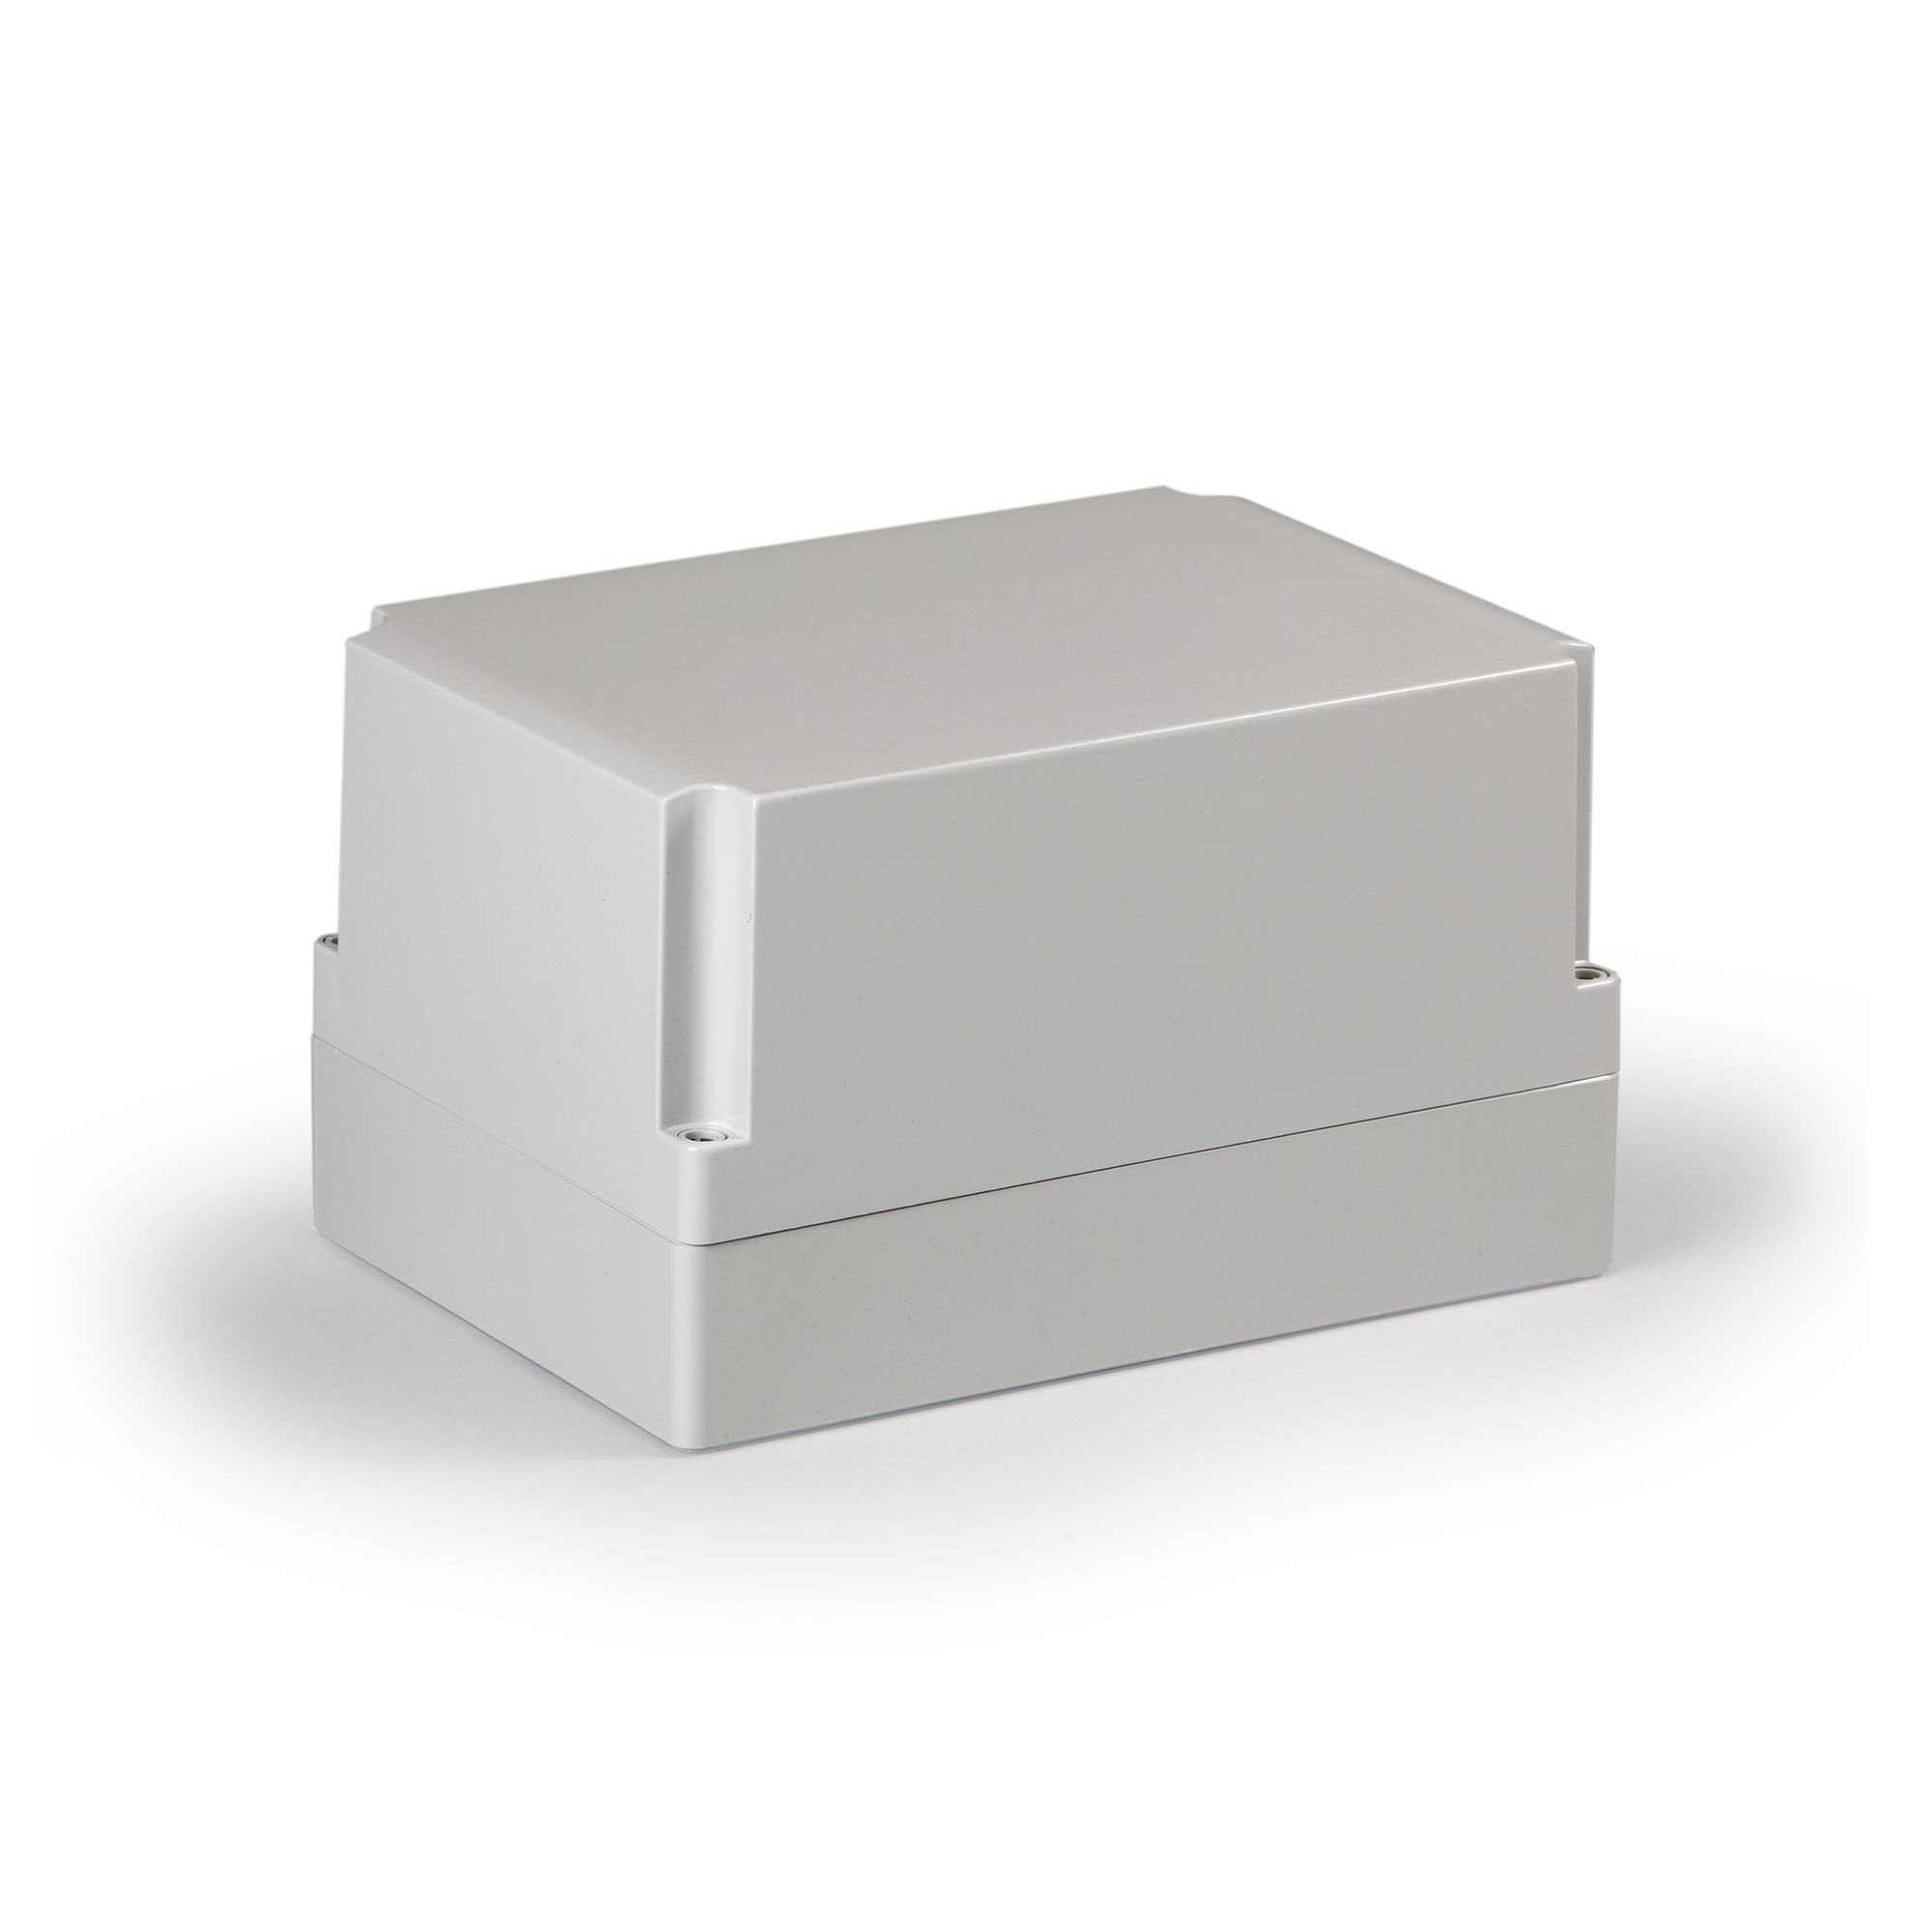 SABP Medium Polycarbonate Terminal Box, ABS | 125x125x75 |SABP182508G